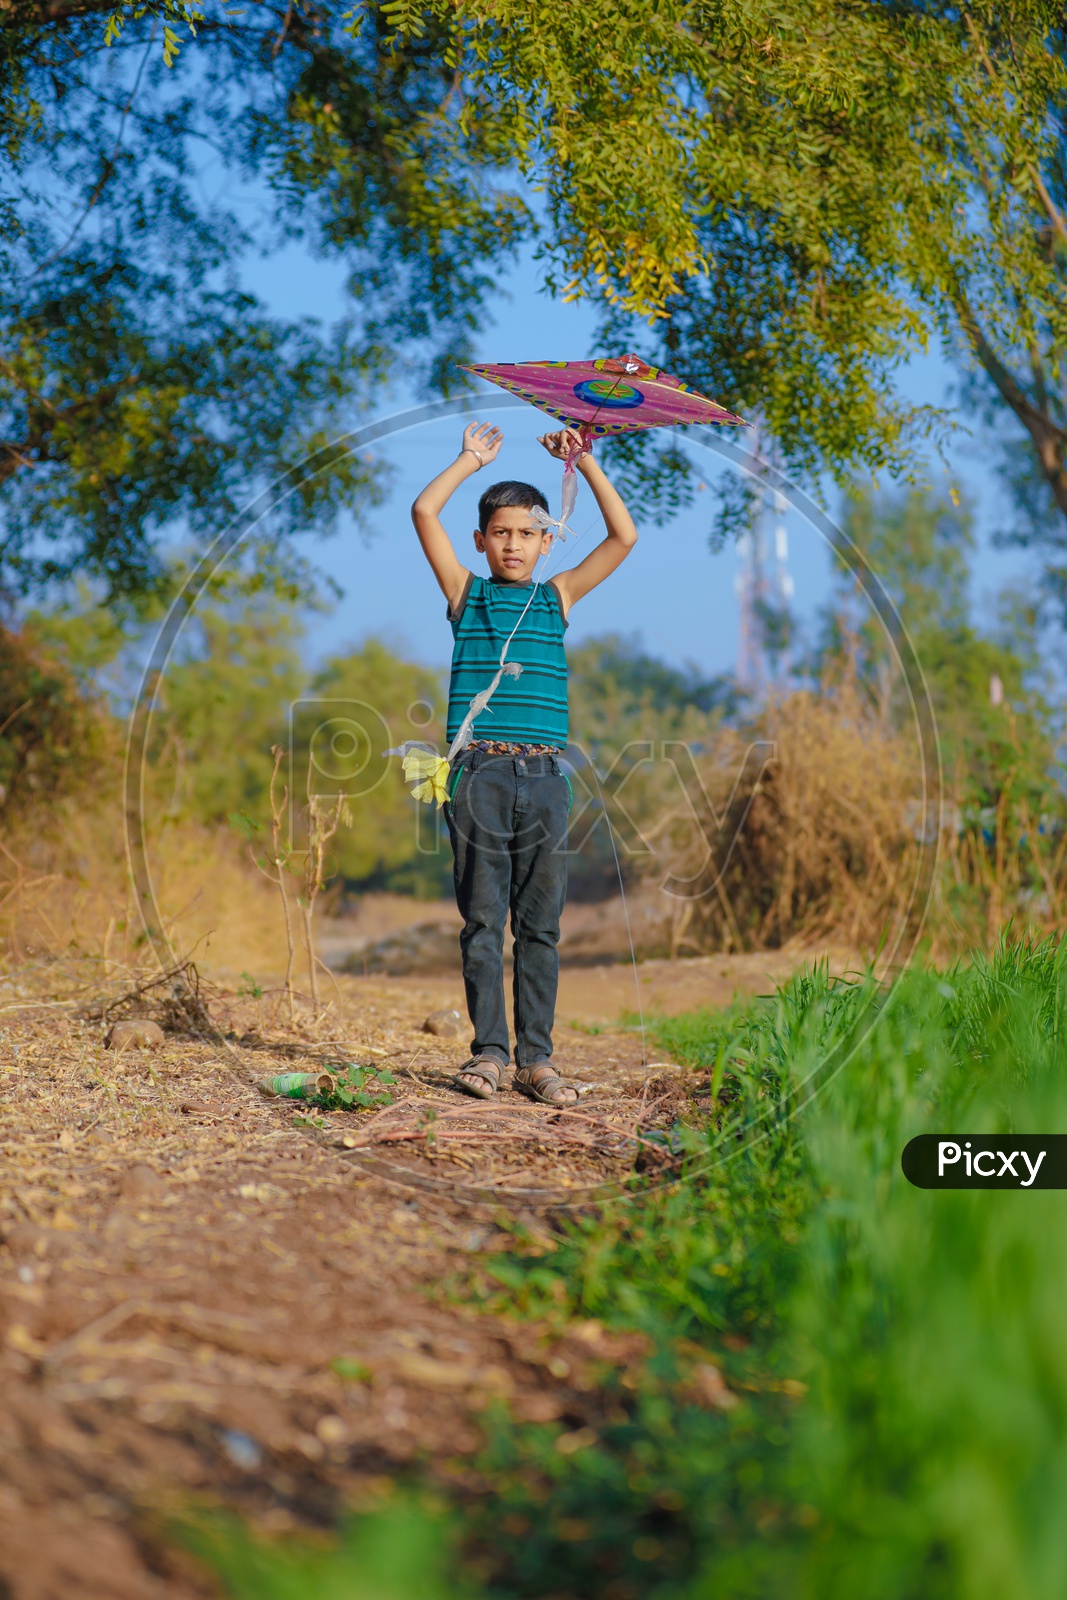 Indian Rural Boy Playing With Kite